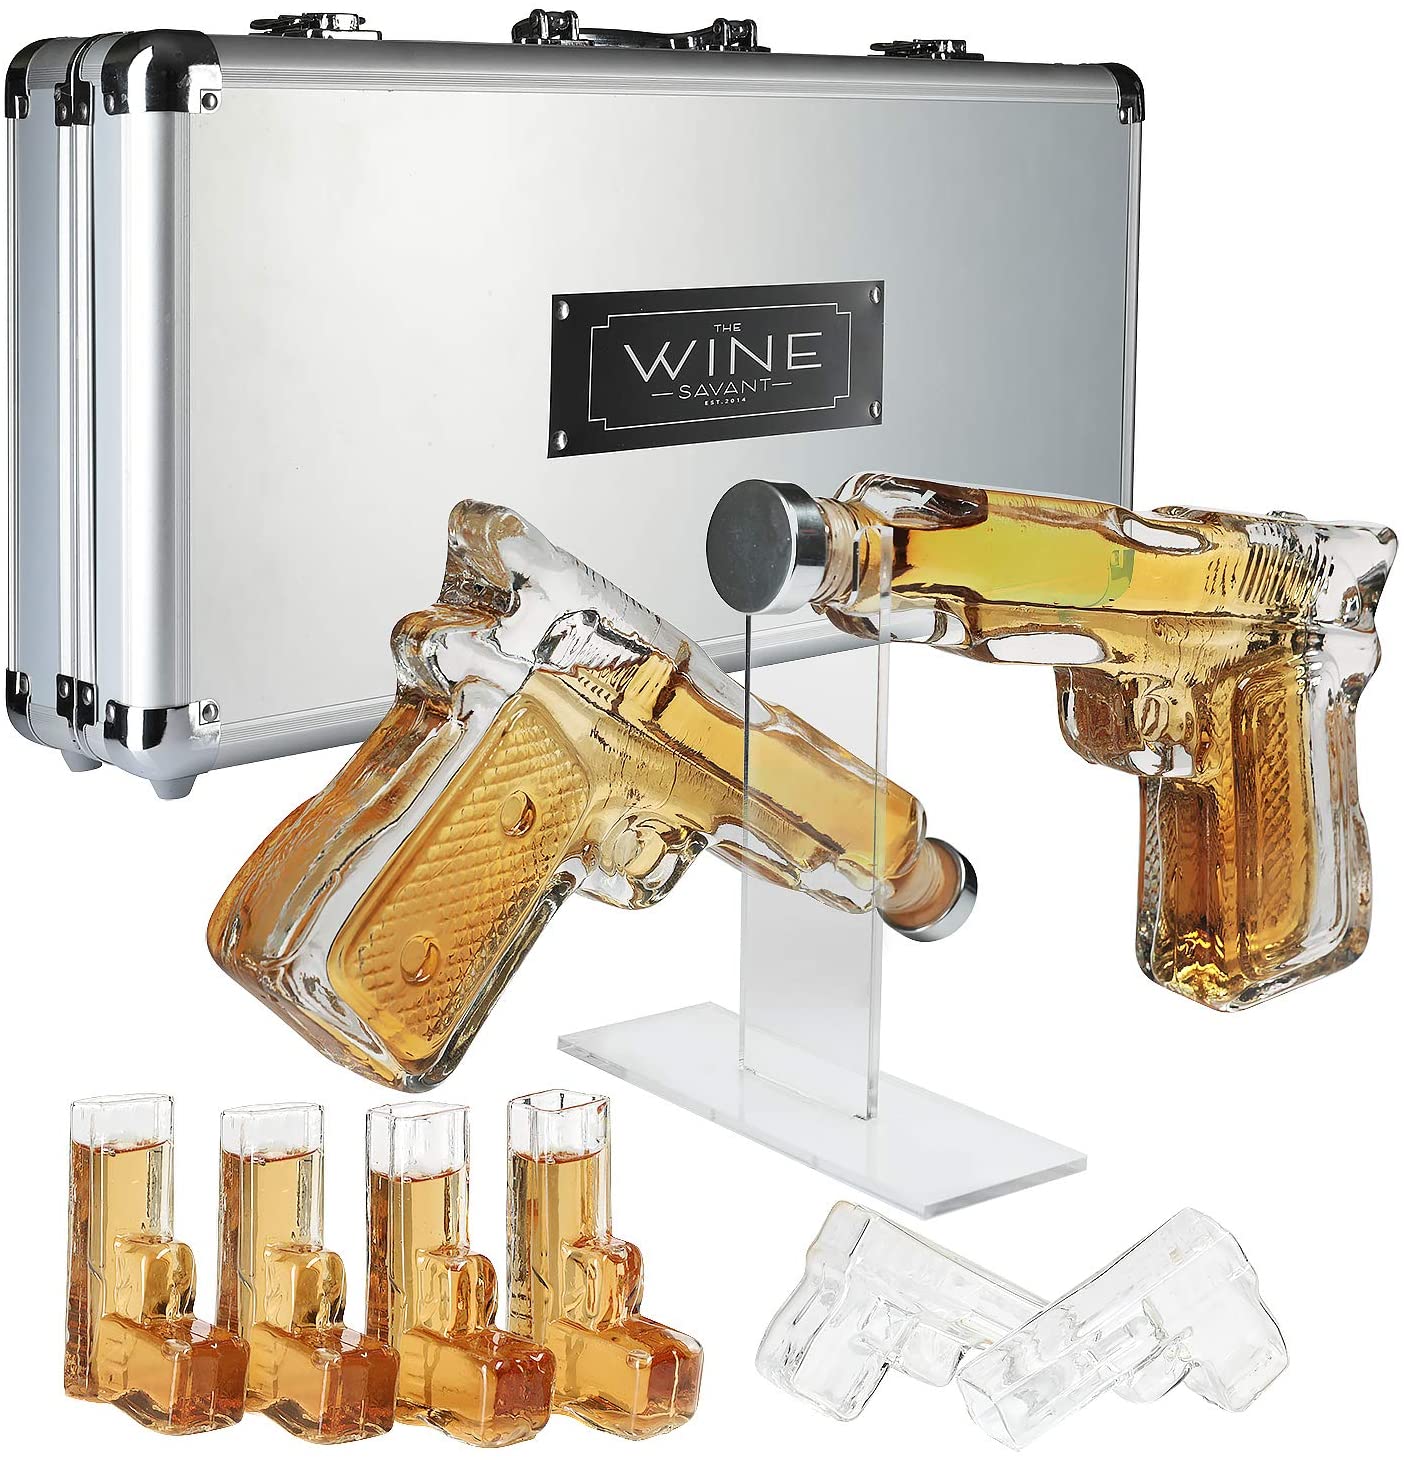 Hand guns whiskey decanters